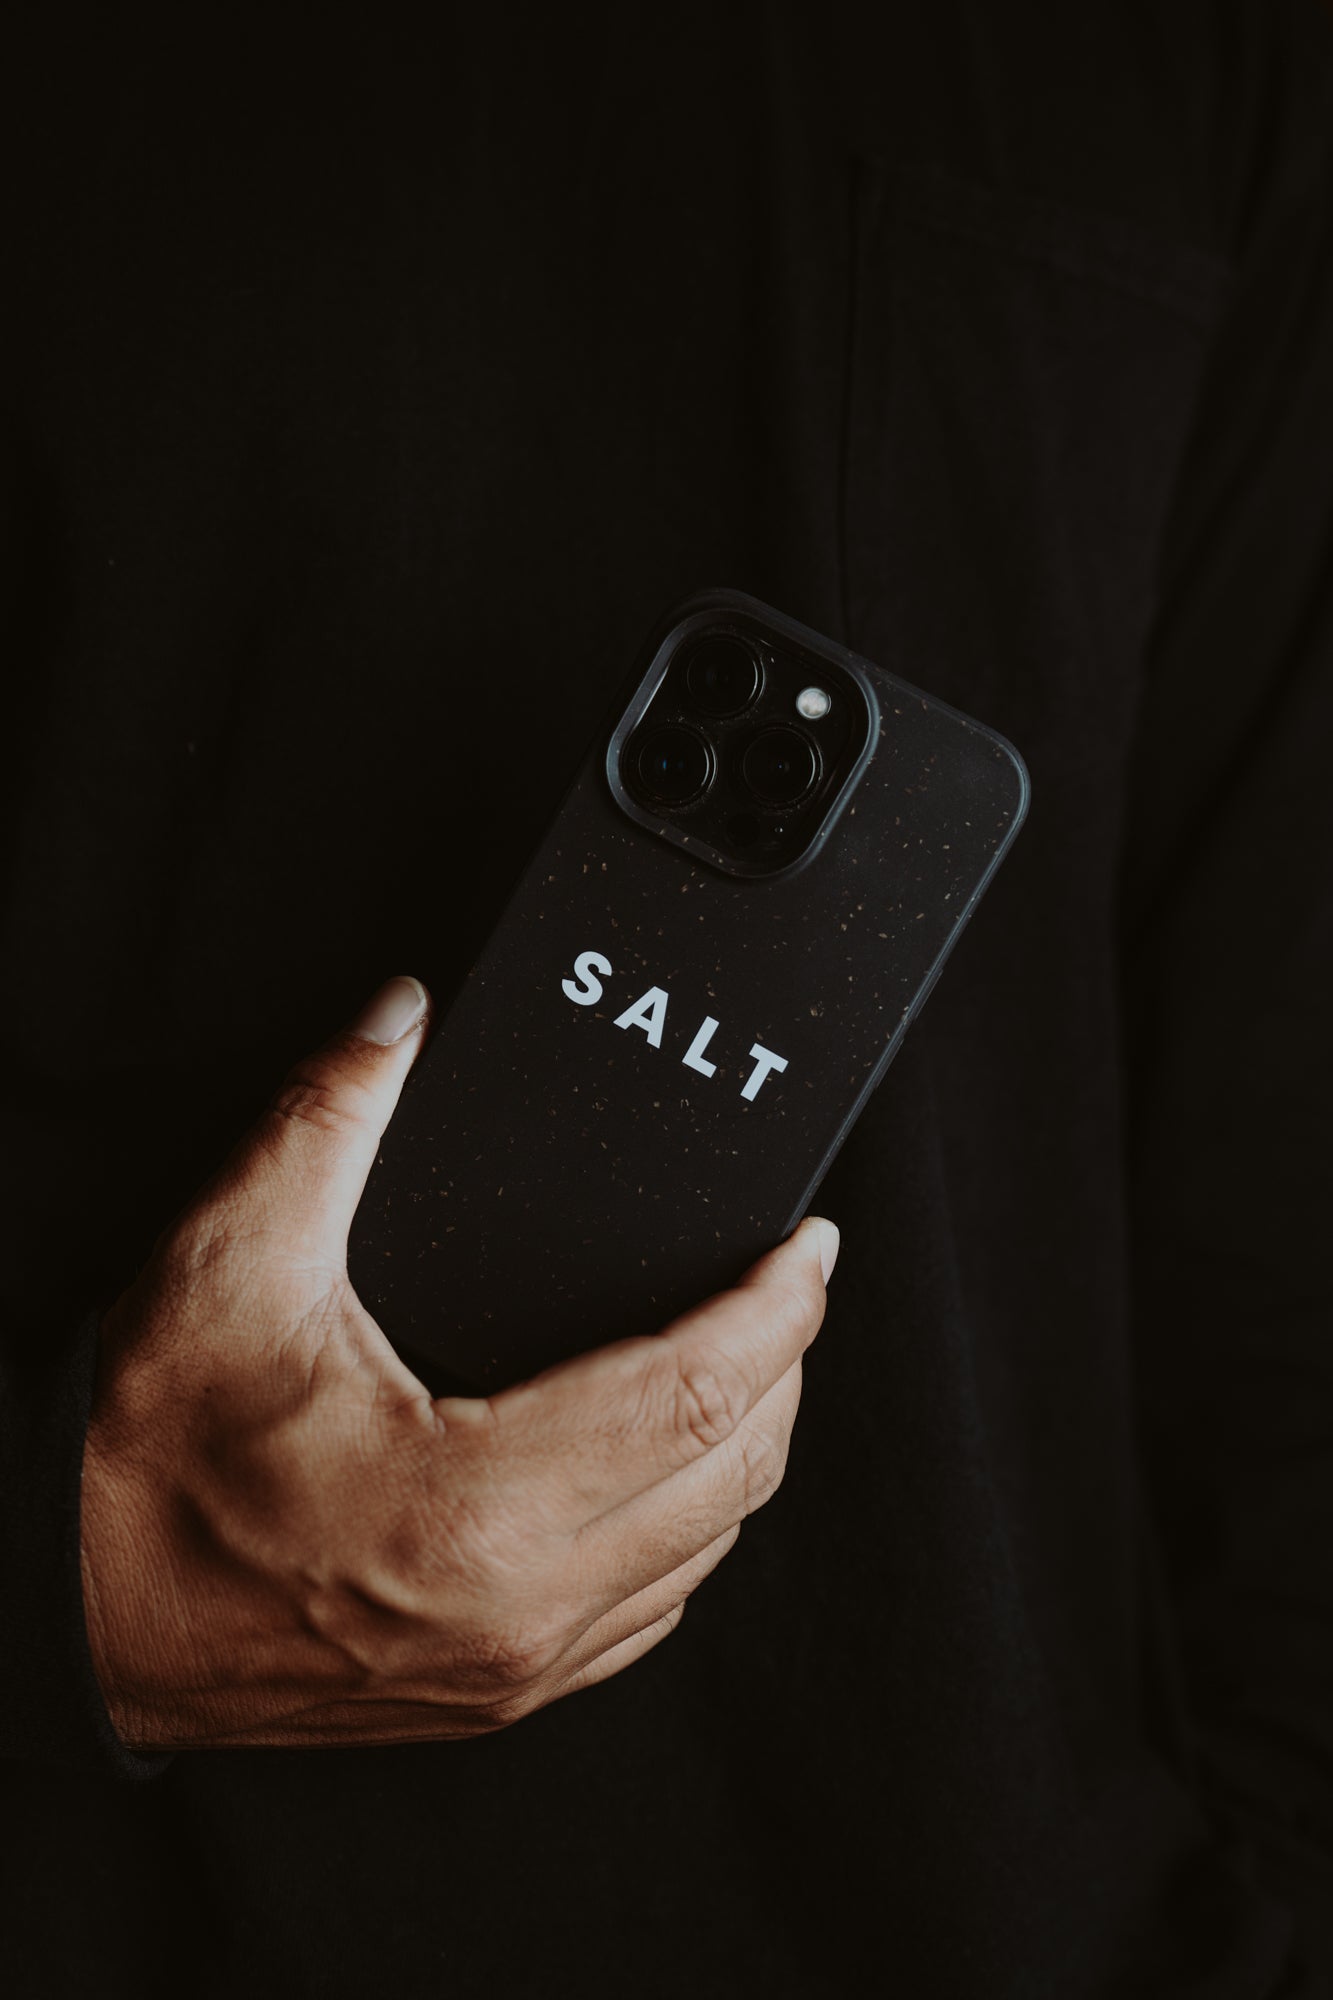 SALT Blodegradable iPhone Case -Pre Order Product-